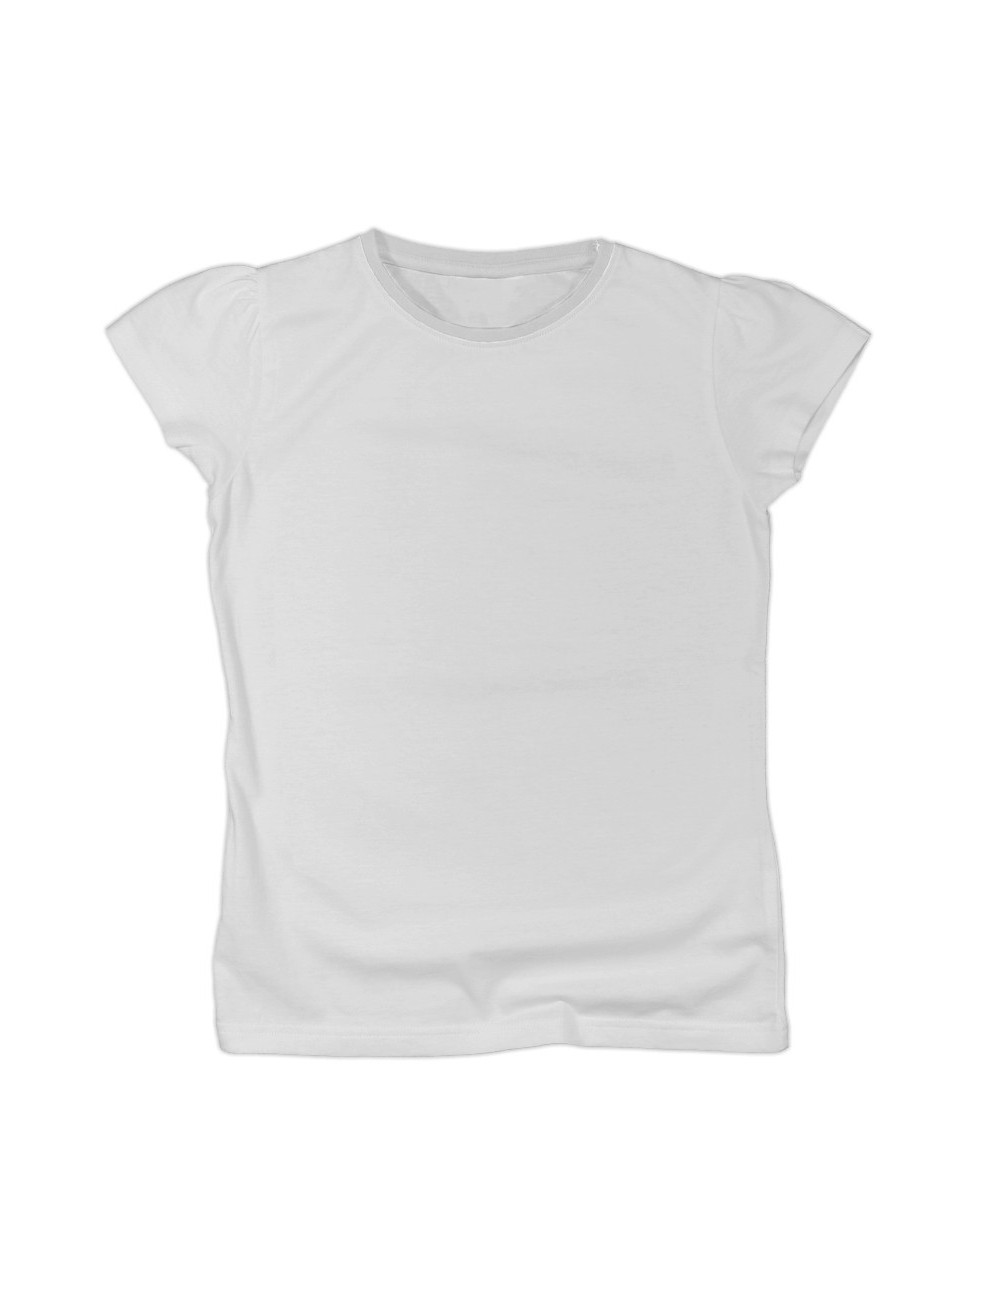 Tricou alb pentru fete 6 - 15 ani